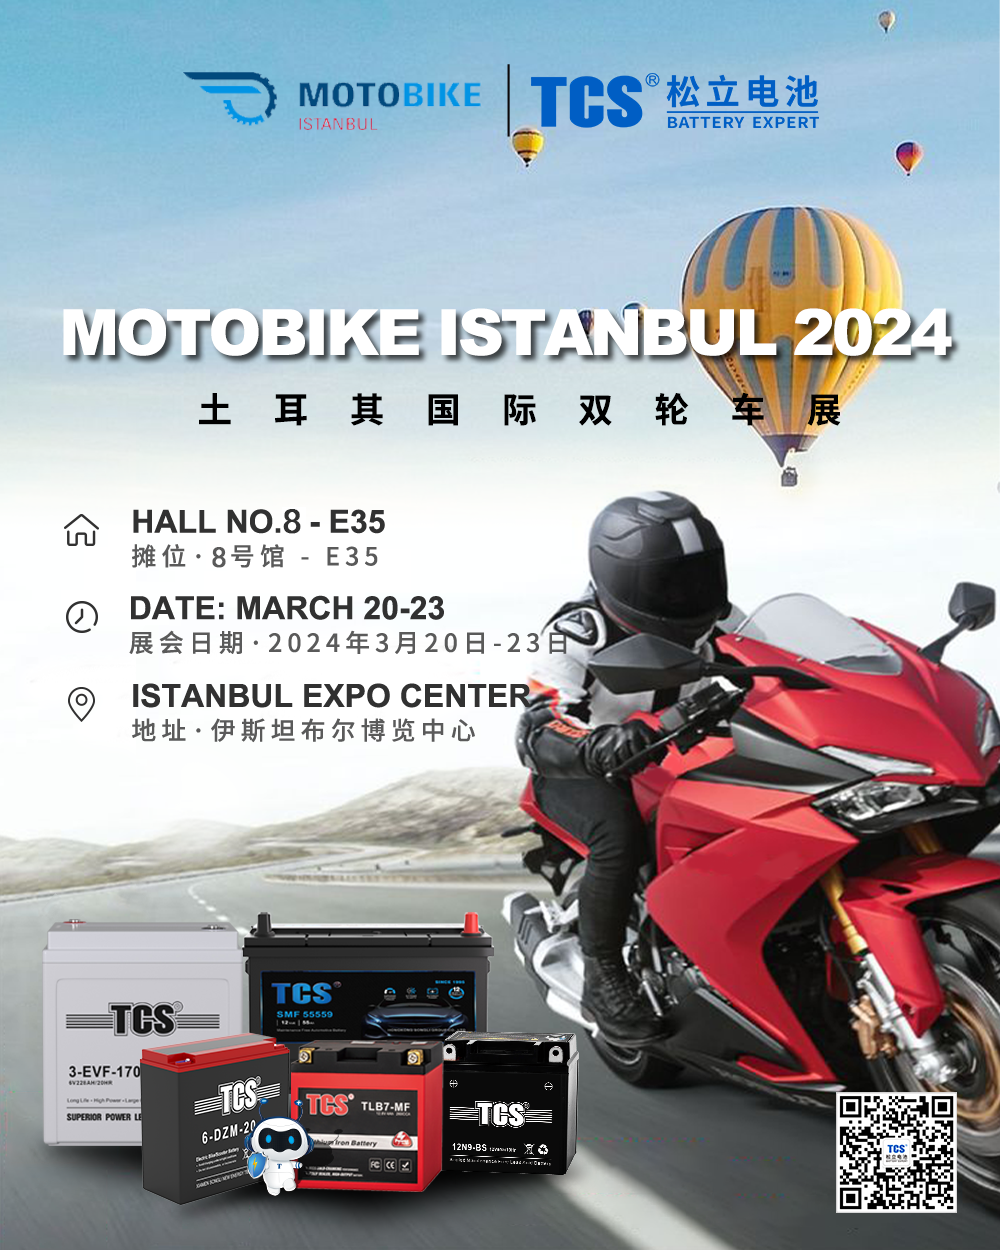 Motorbike Istanbul 2024